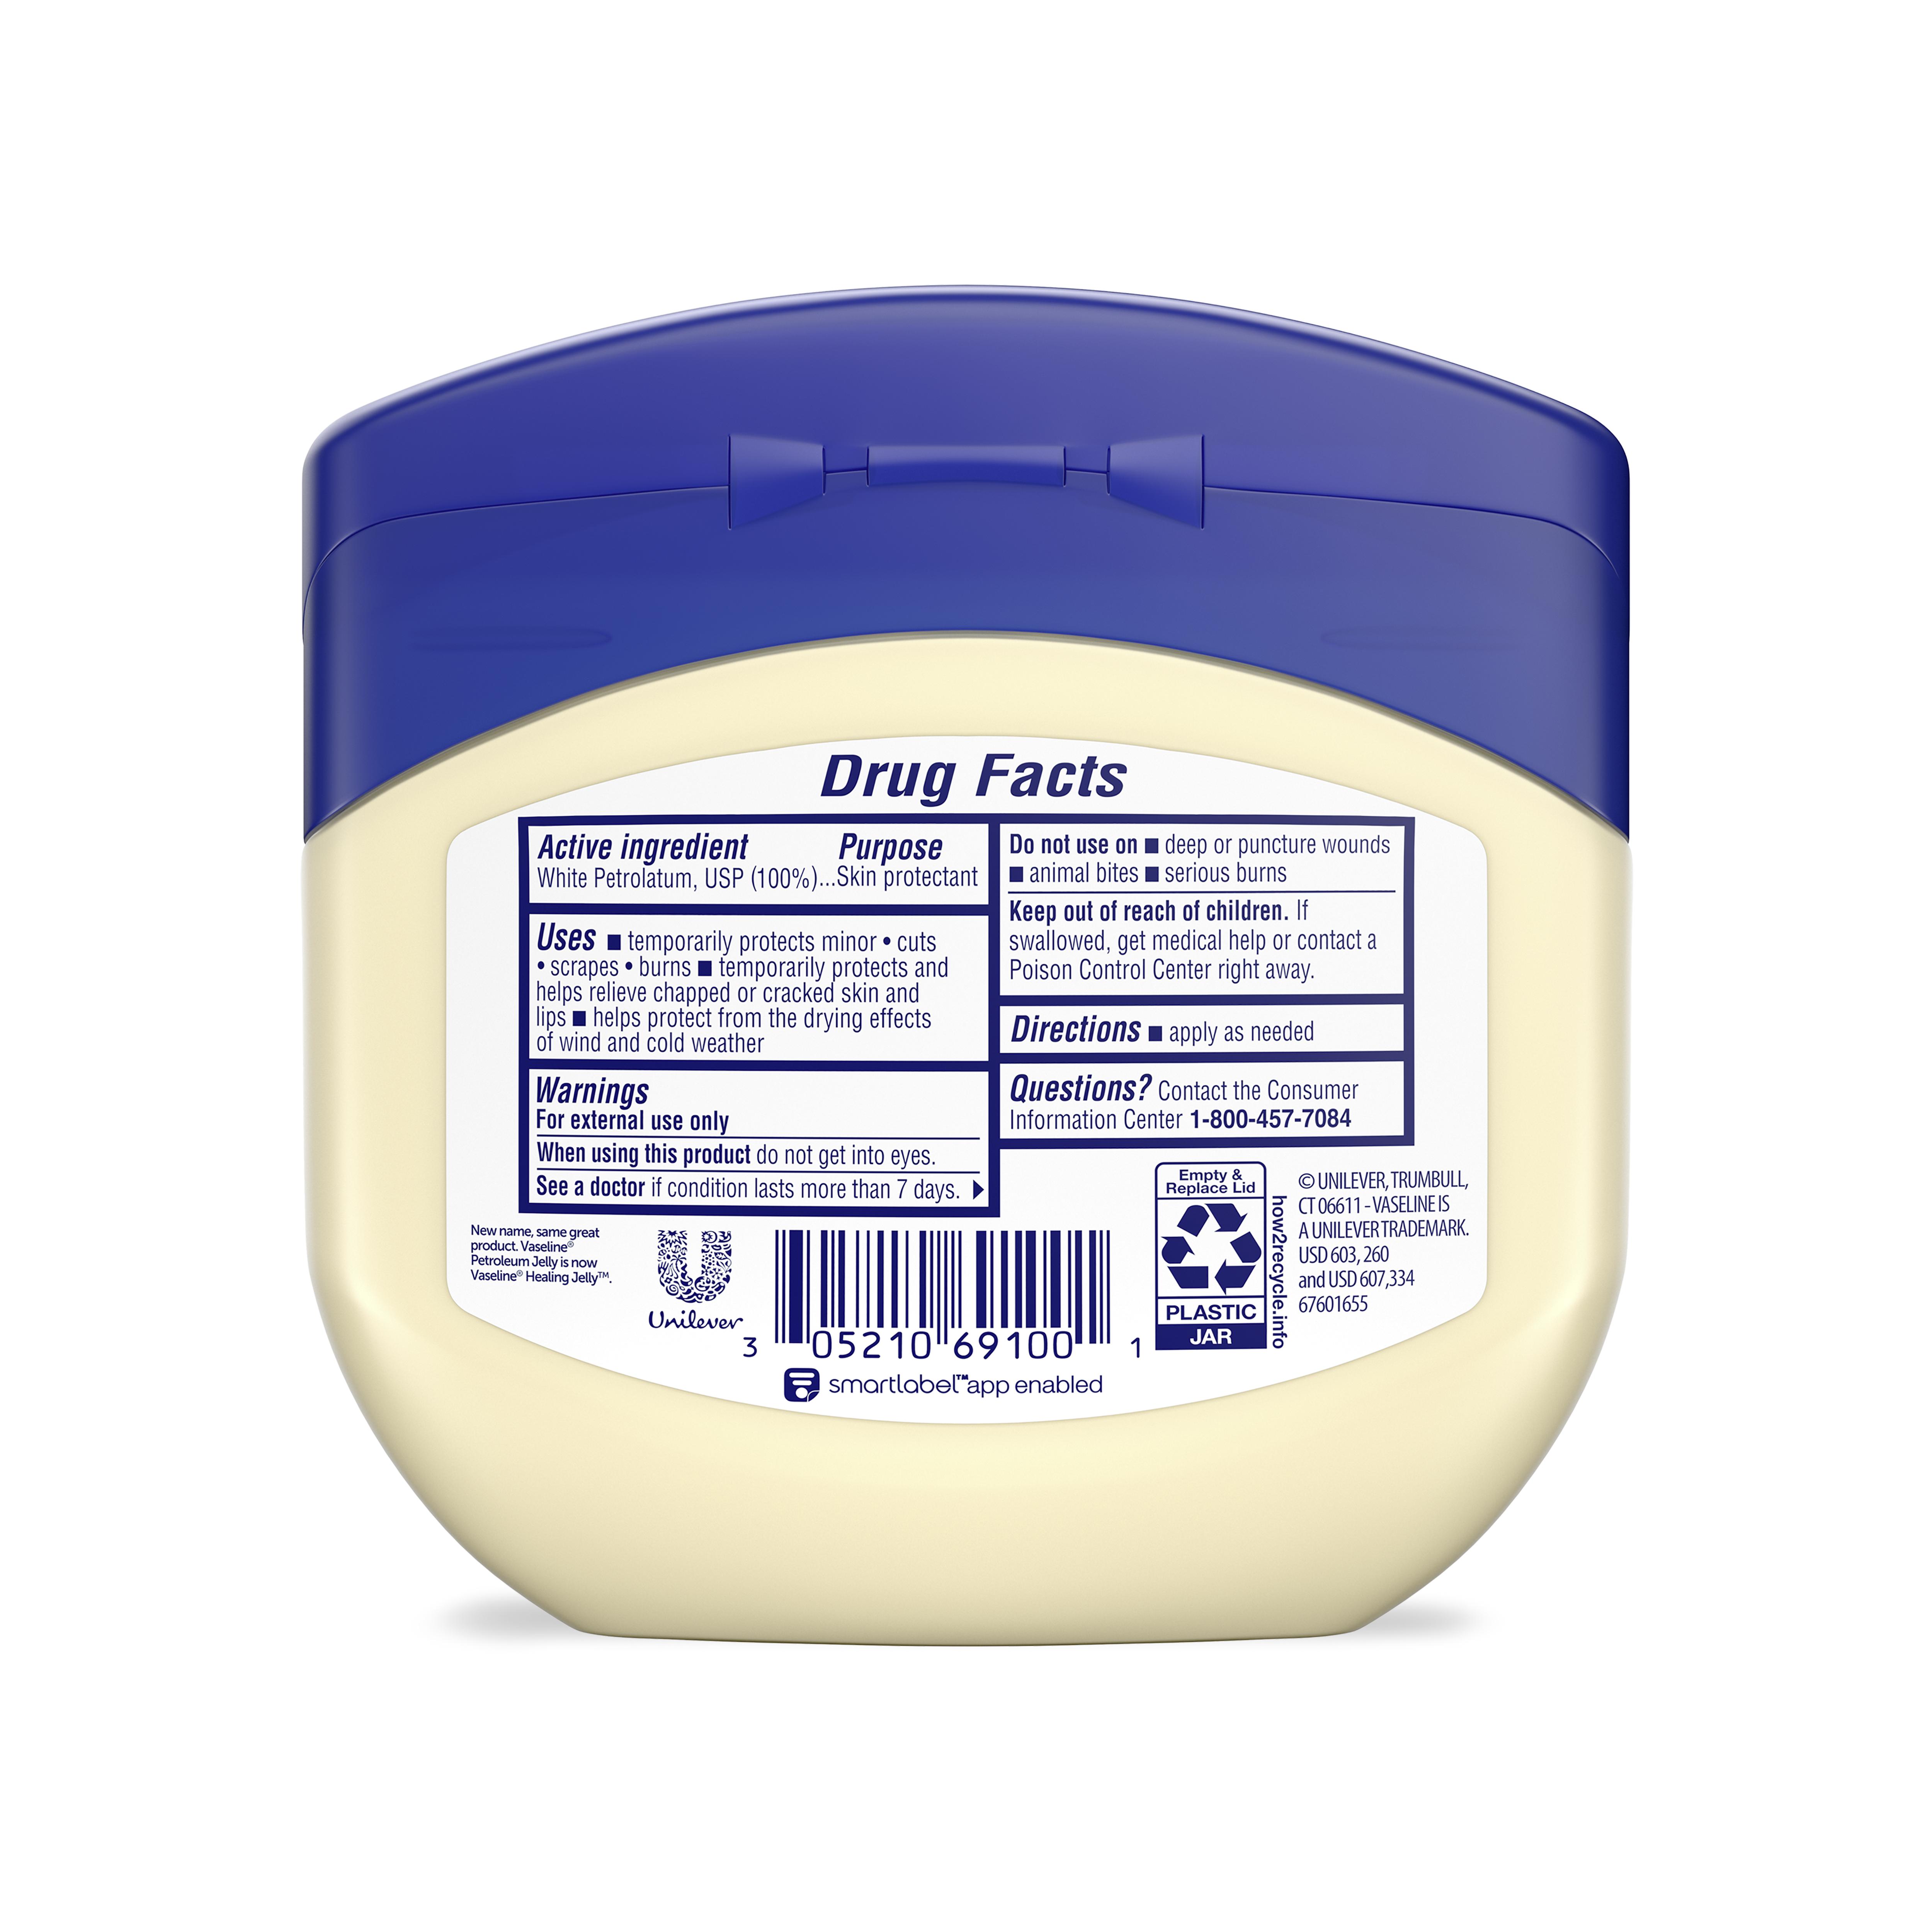 Vaseline Original Healing Moisturizing Petroleum Jelly for Dry Skin, 13 oz (2 Count) - image 2 of 7